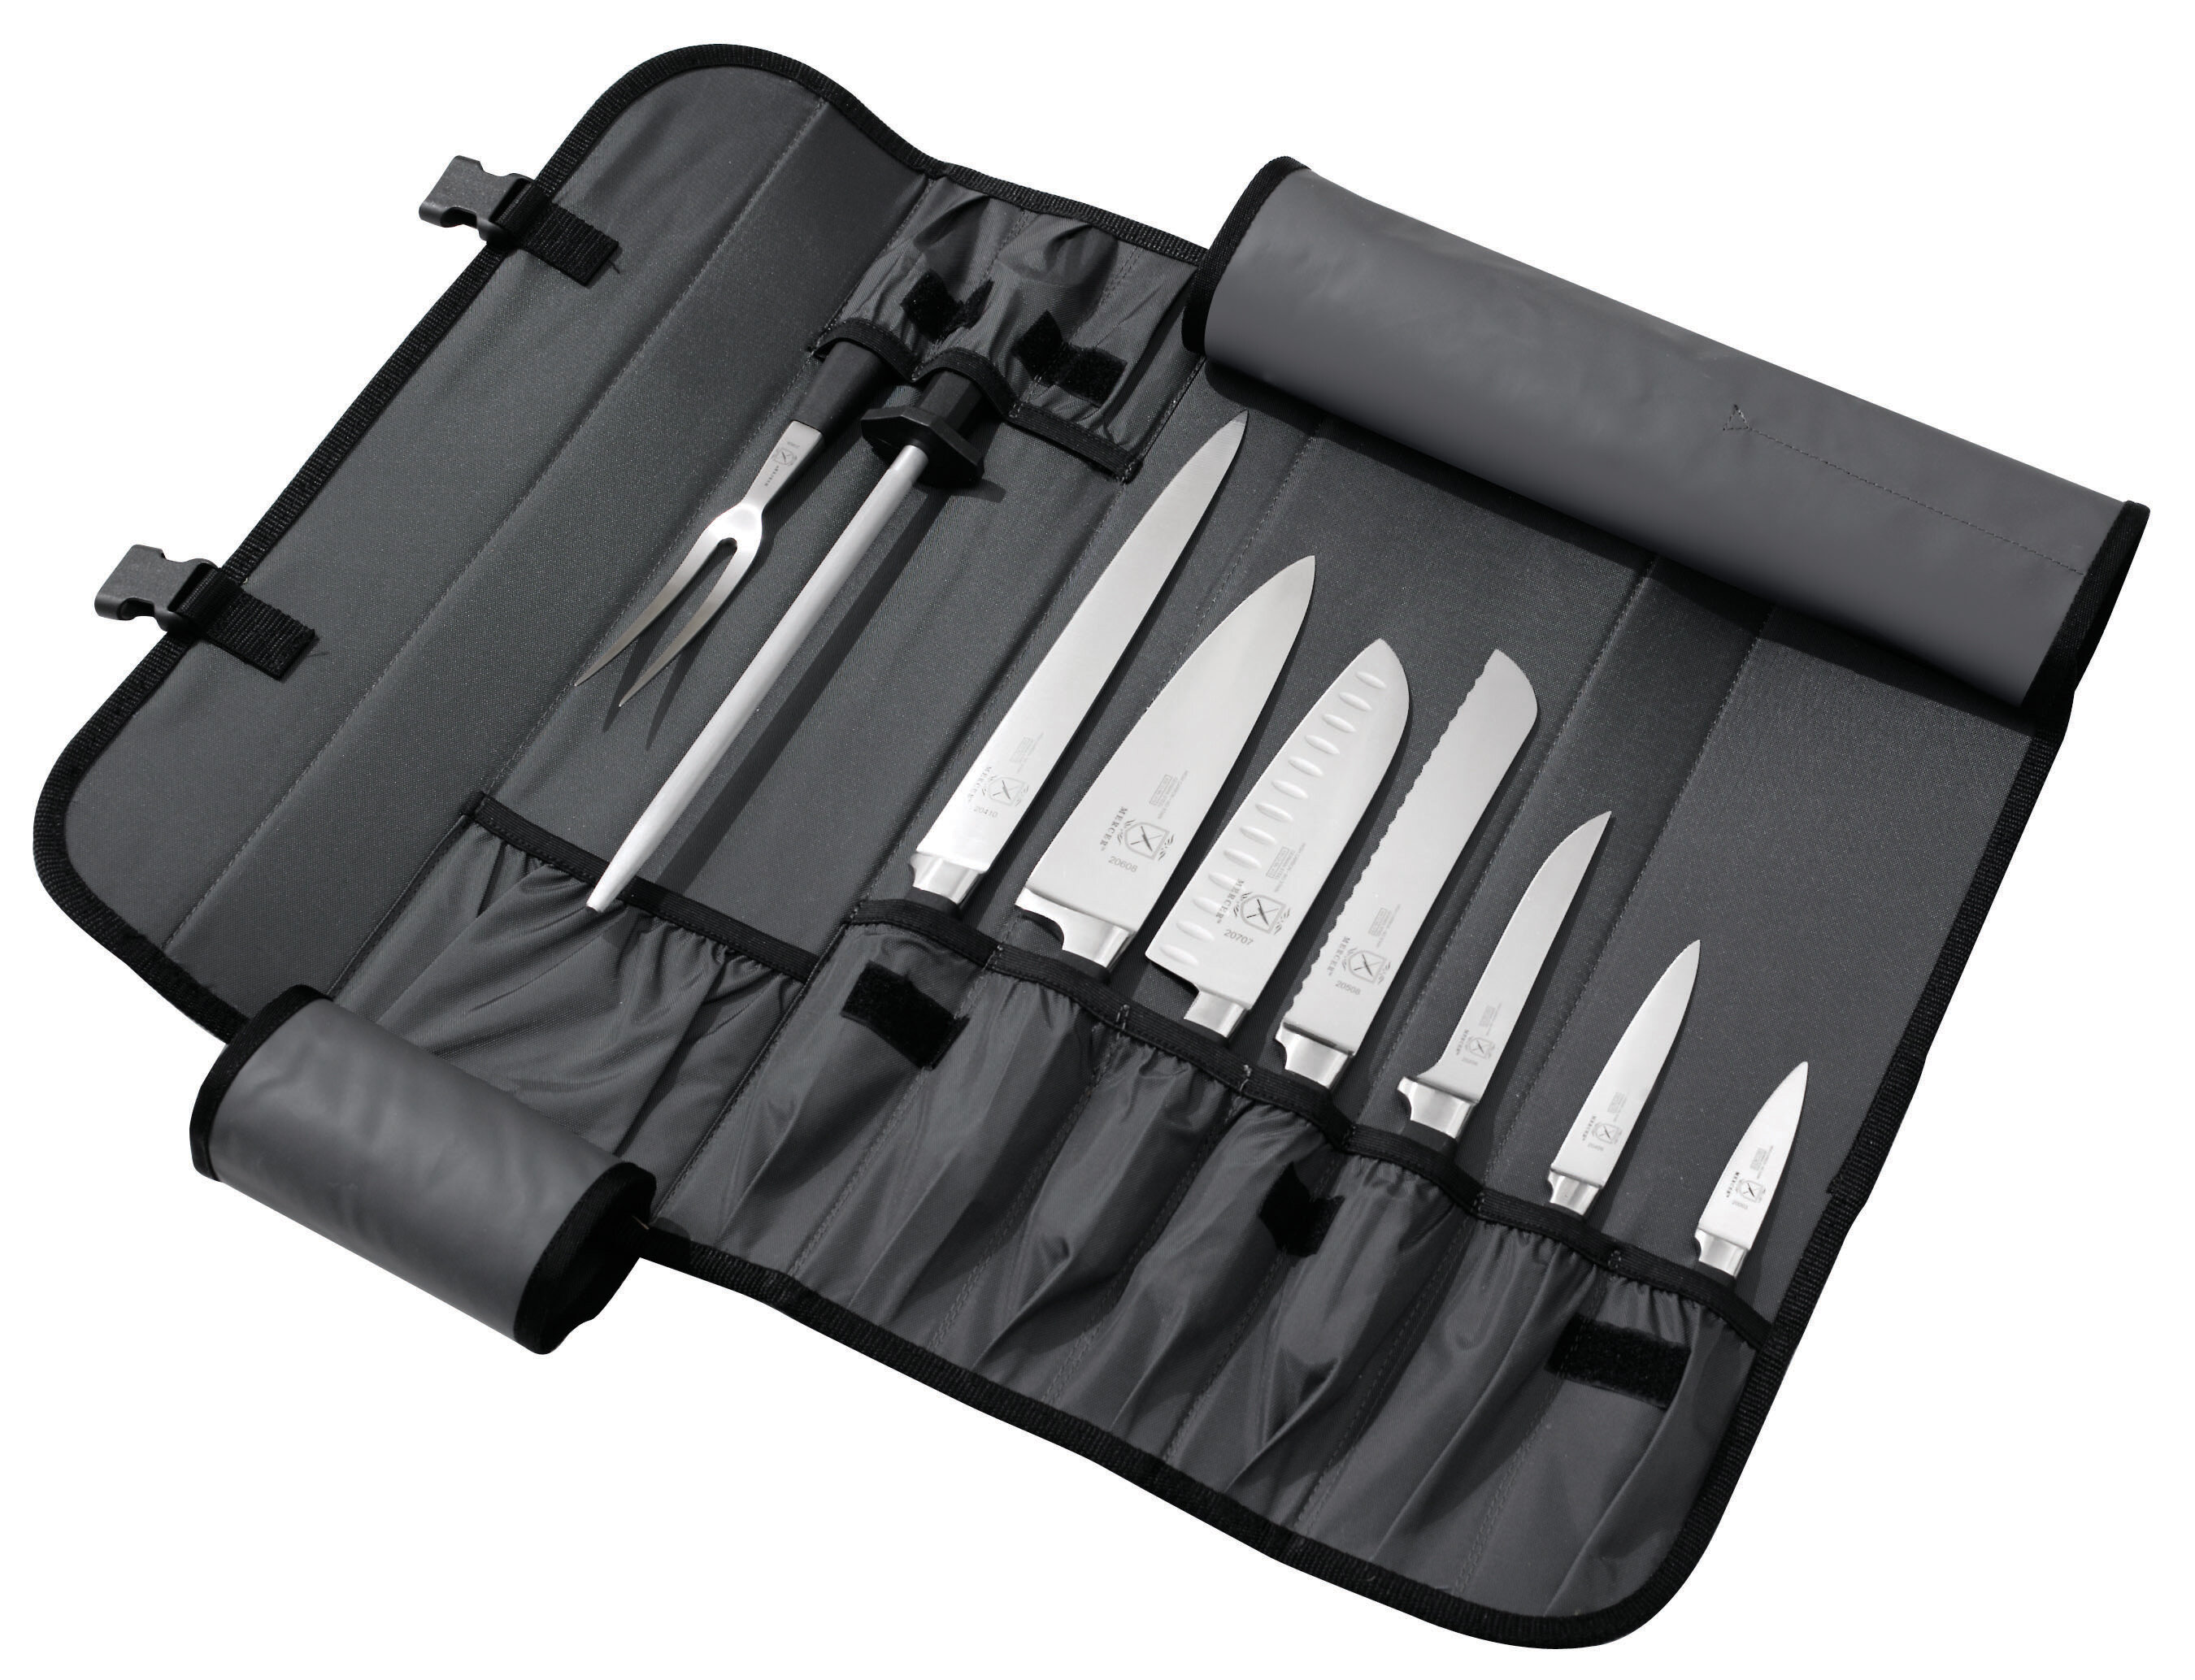 Millennia Paring Knife Set, 3, Stainless Steel, 3-Pack, Mercer